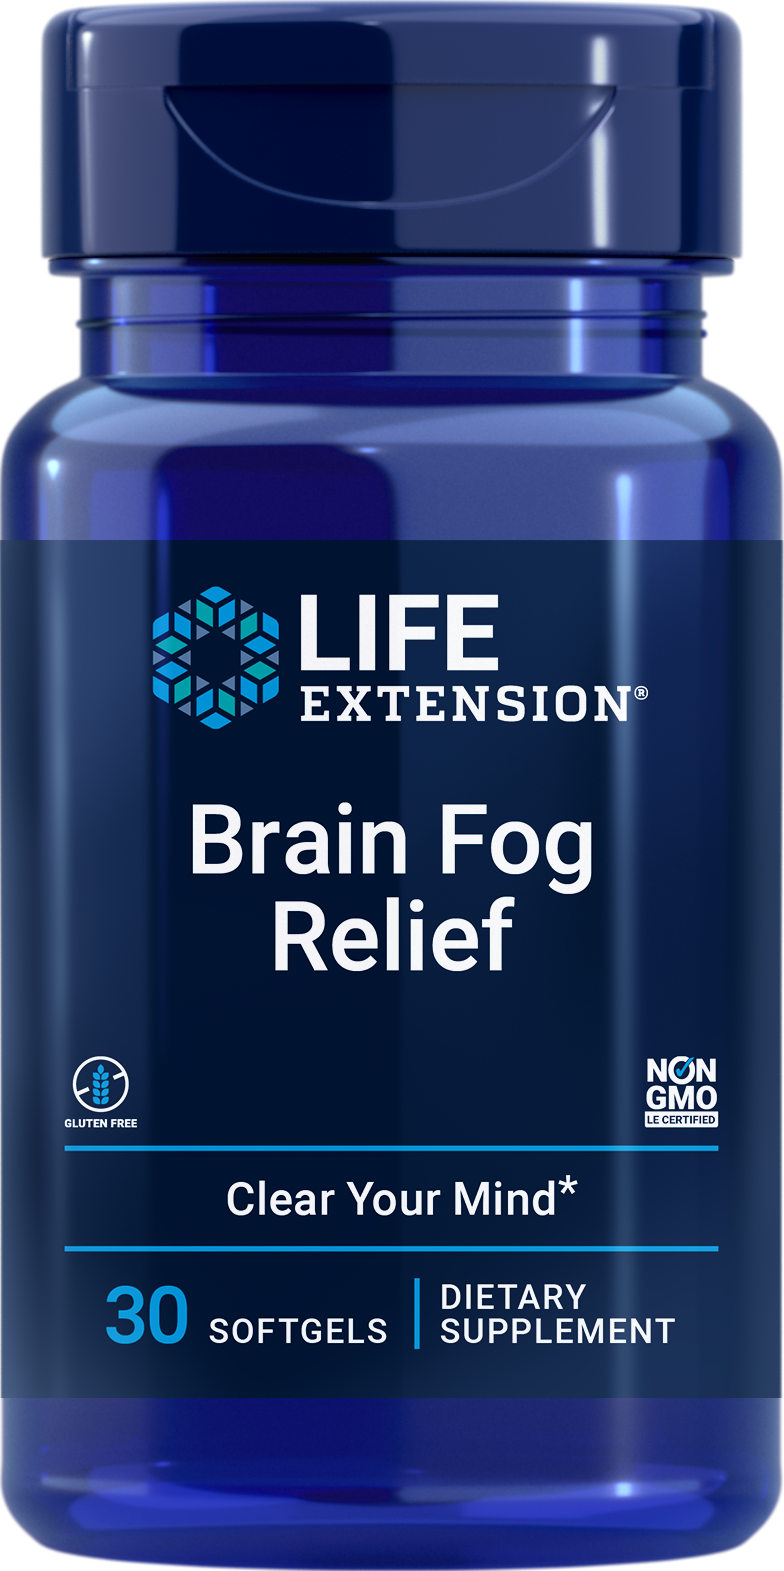 Life Extension new Brain Fog Relief nootropic supplement